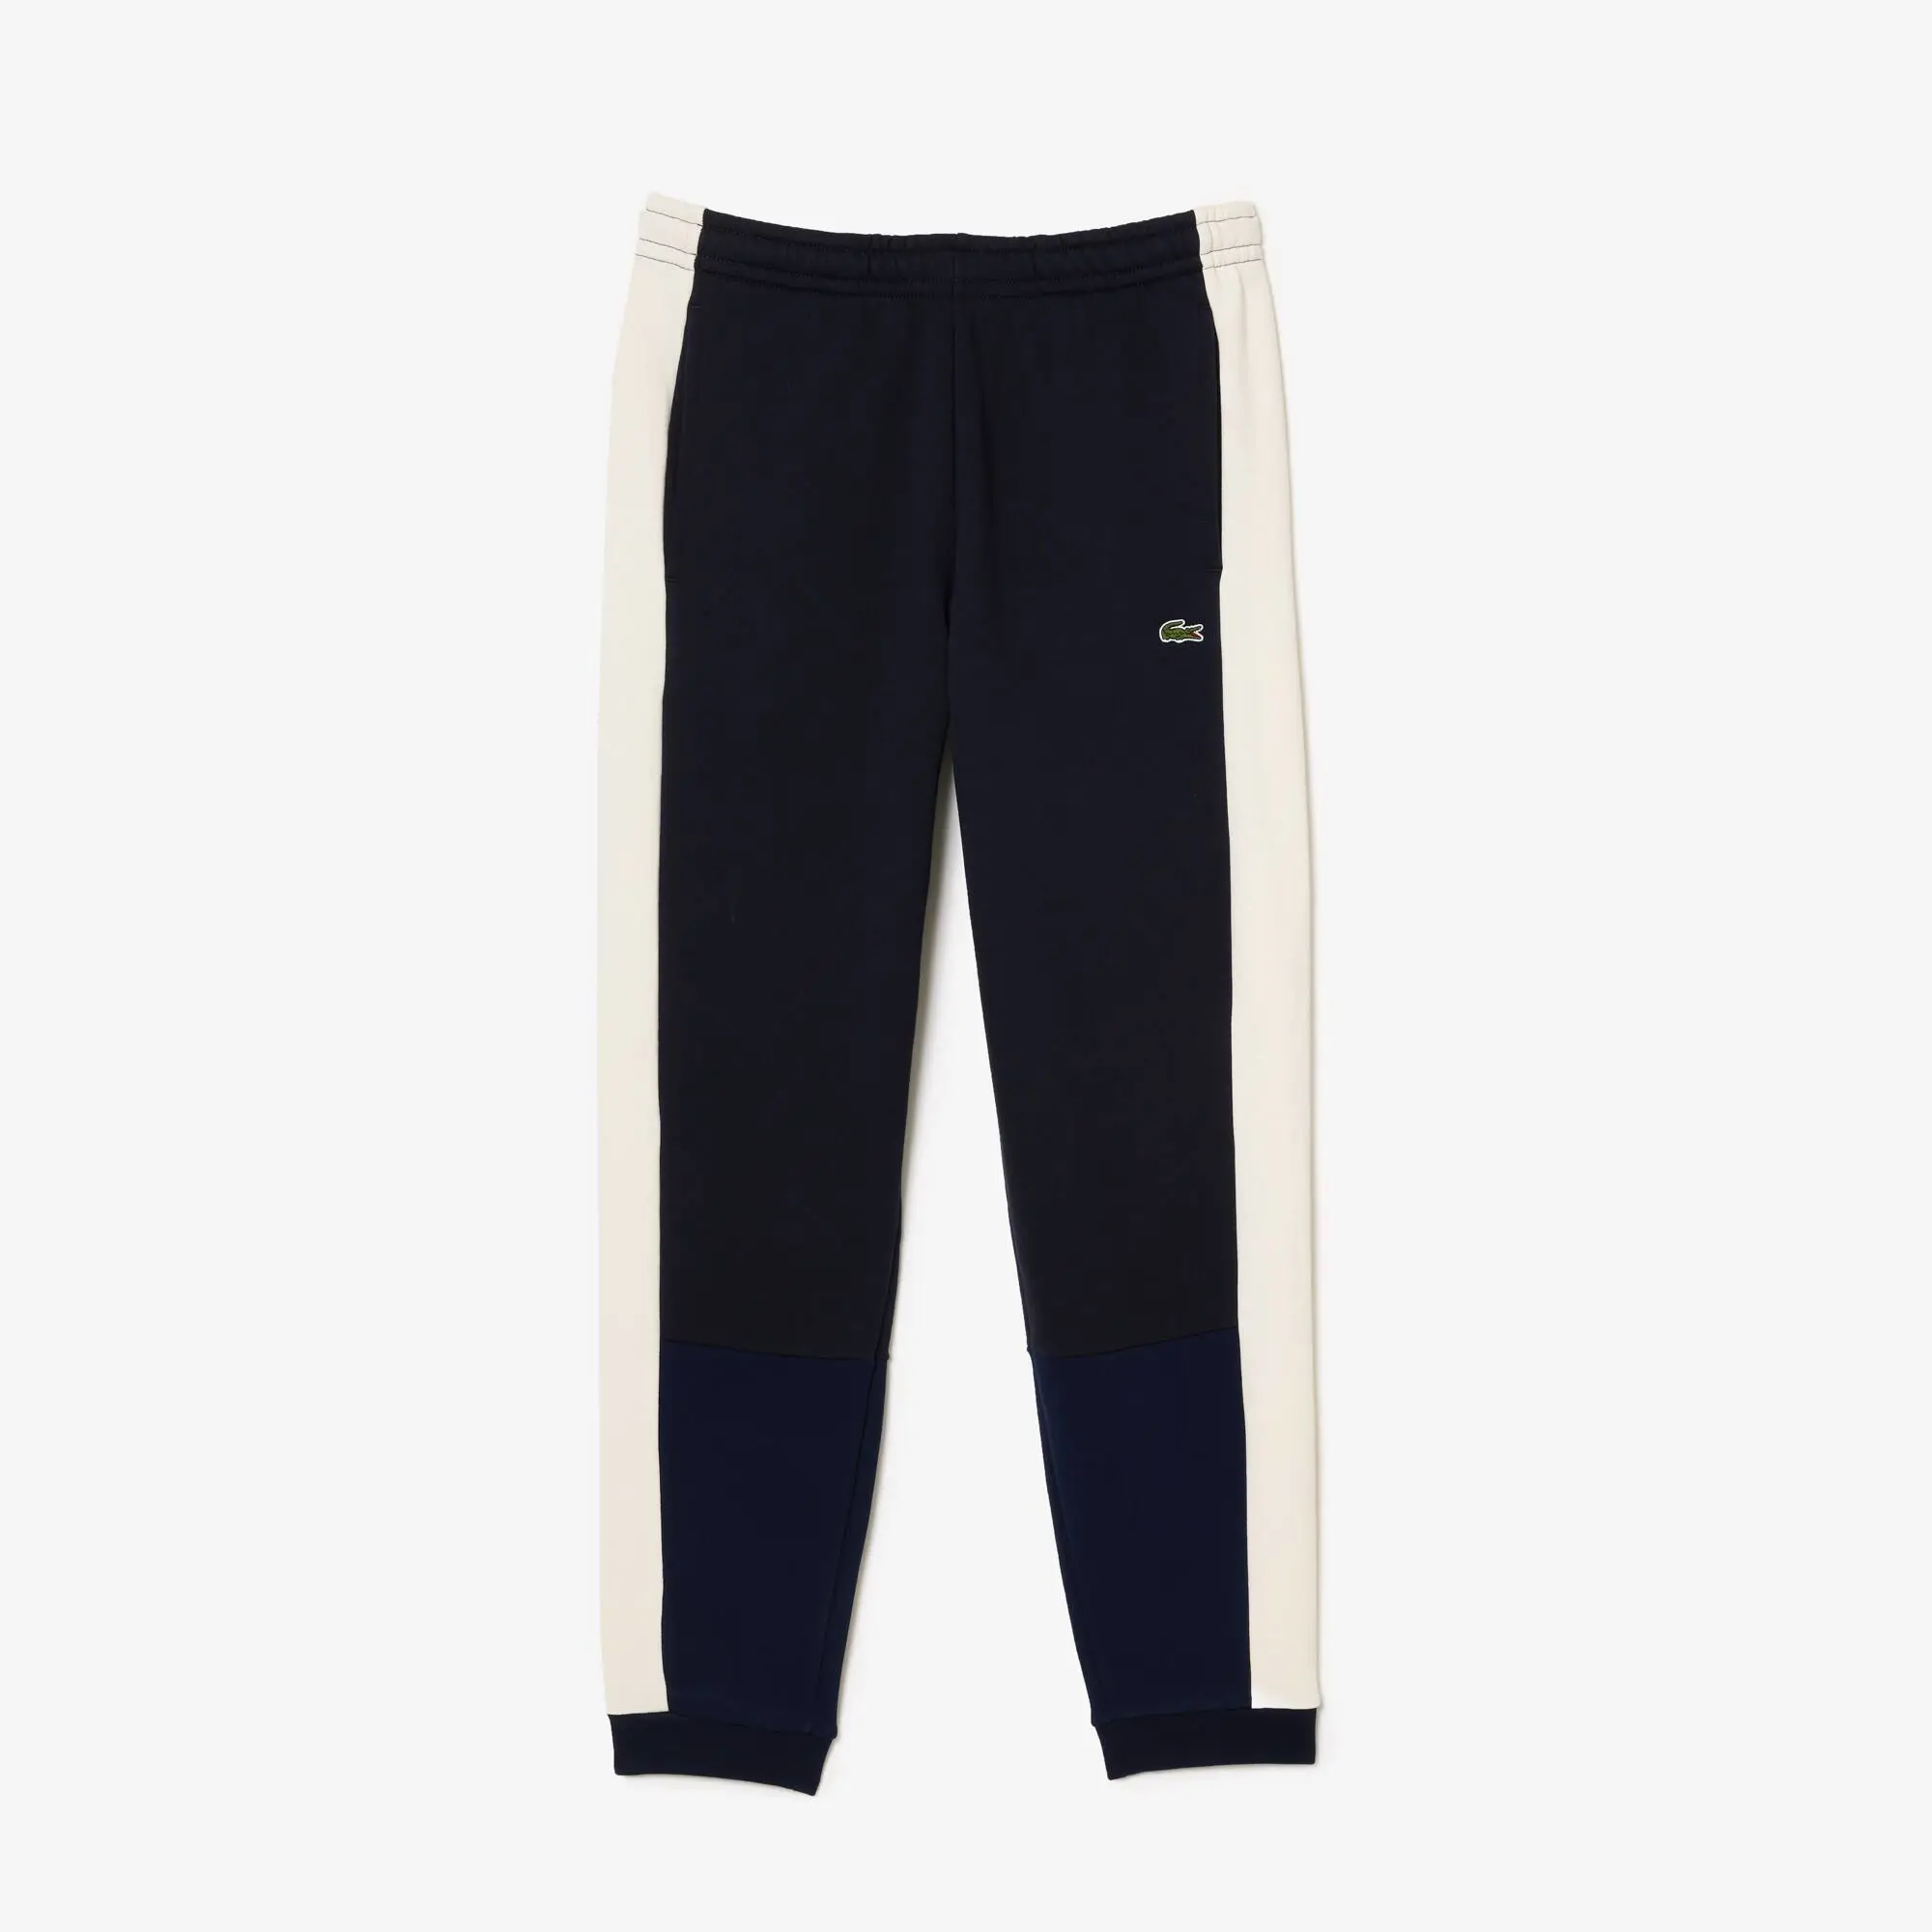 Lacoste Men's Regular Fit Colorblock Sweatpants. 2